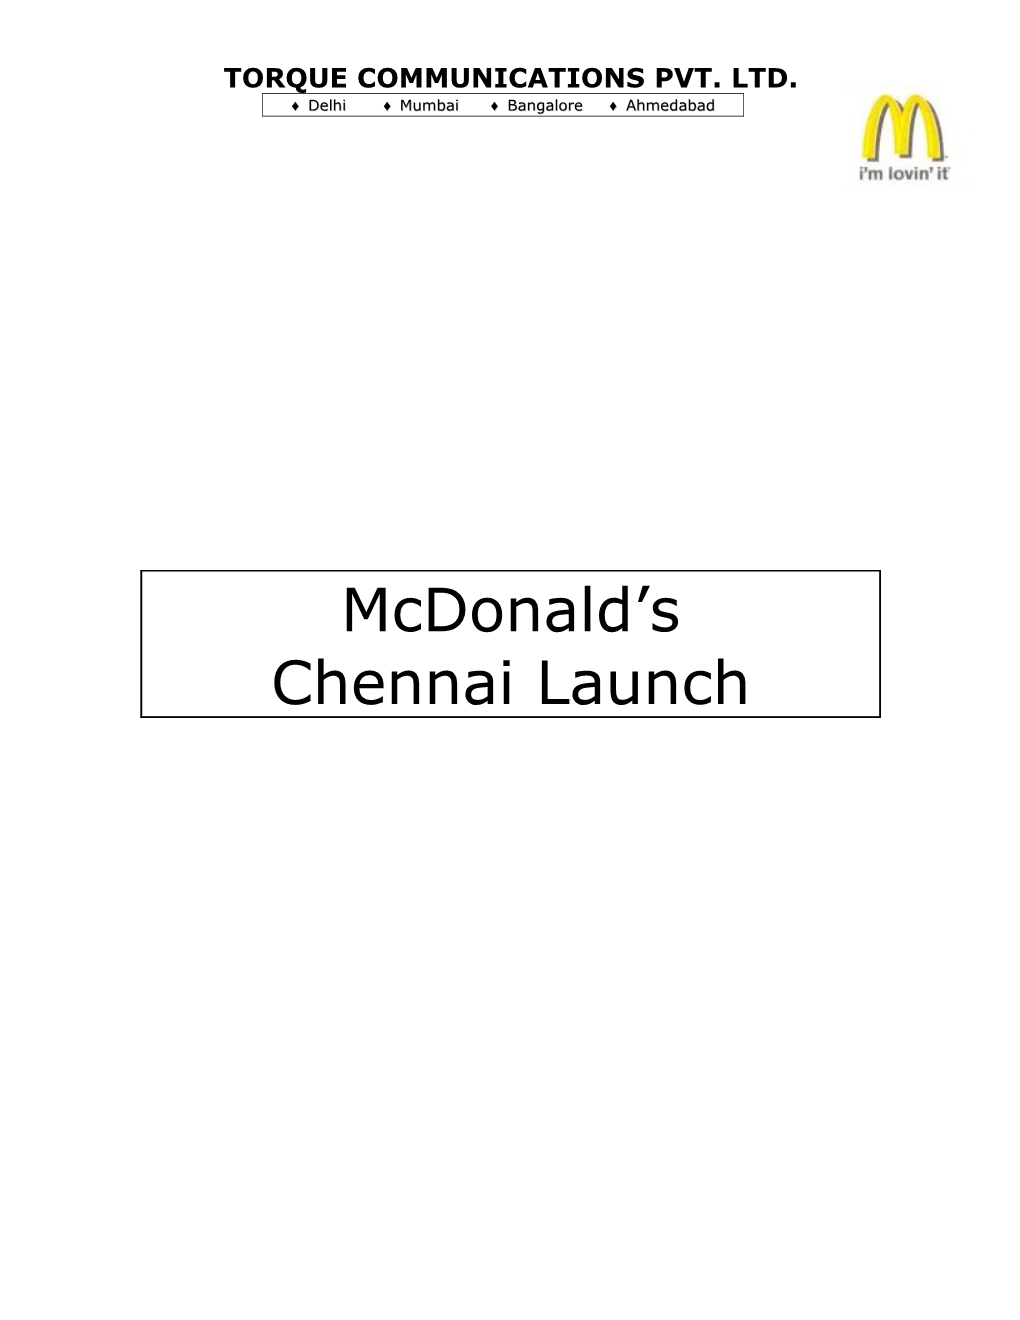 Mcdonald's Chennai Launch